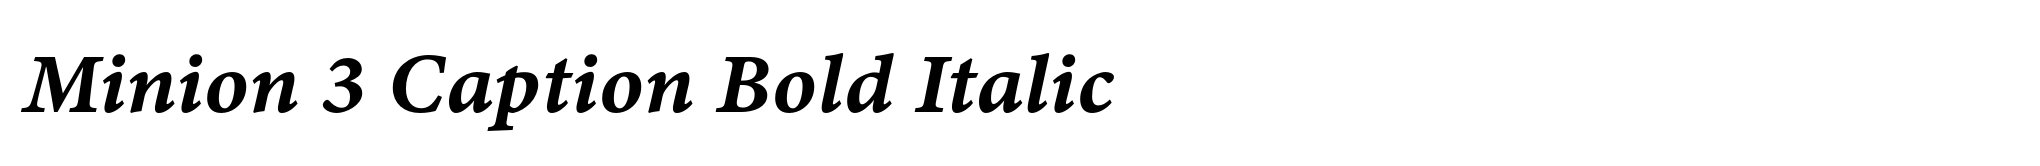 Minion 3 Caption Bold Italic image